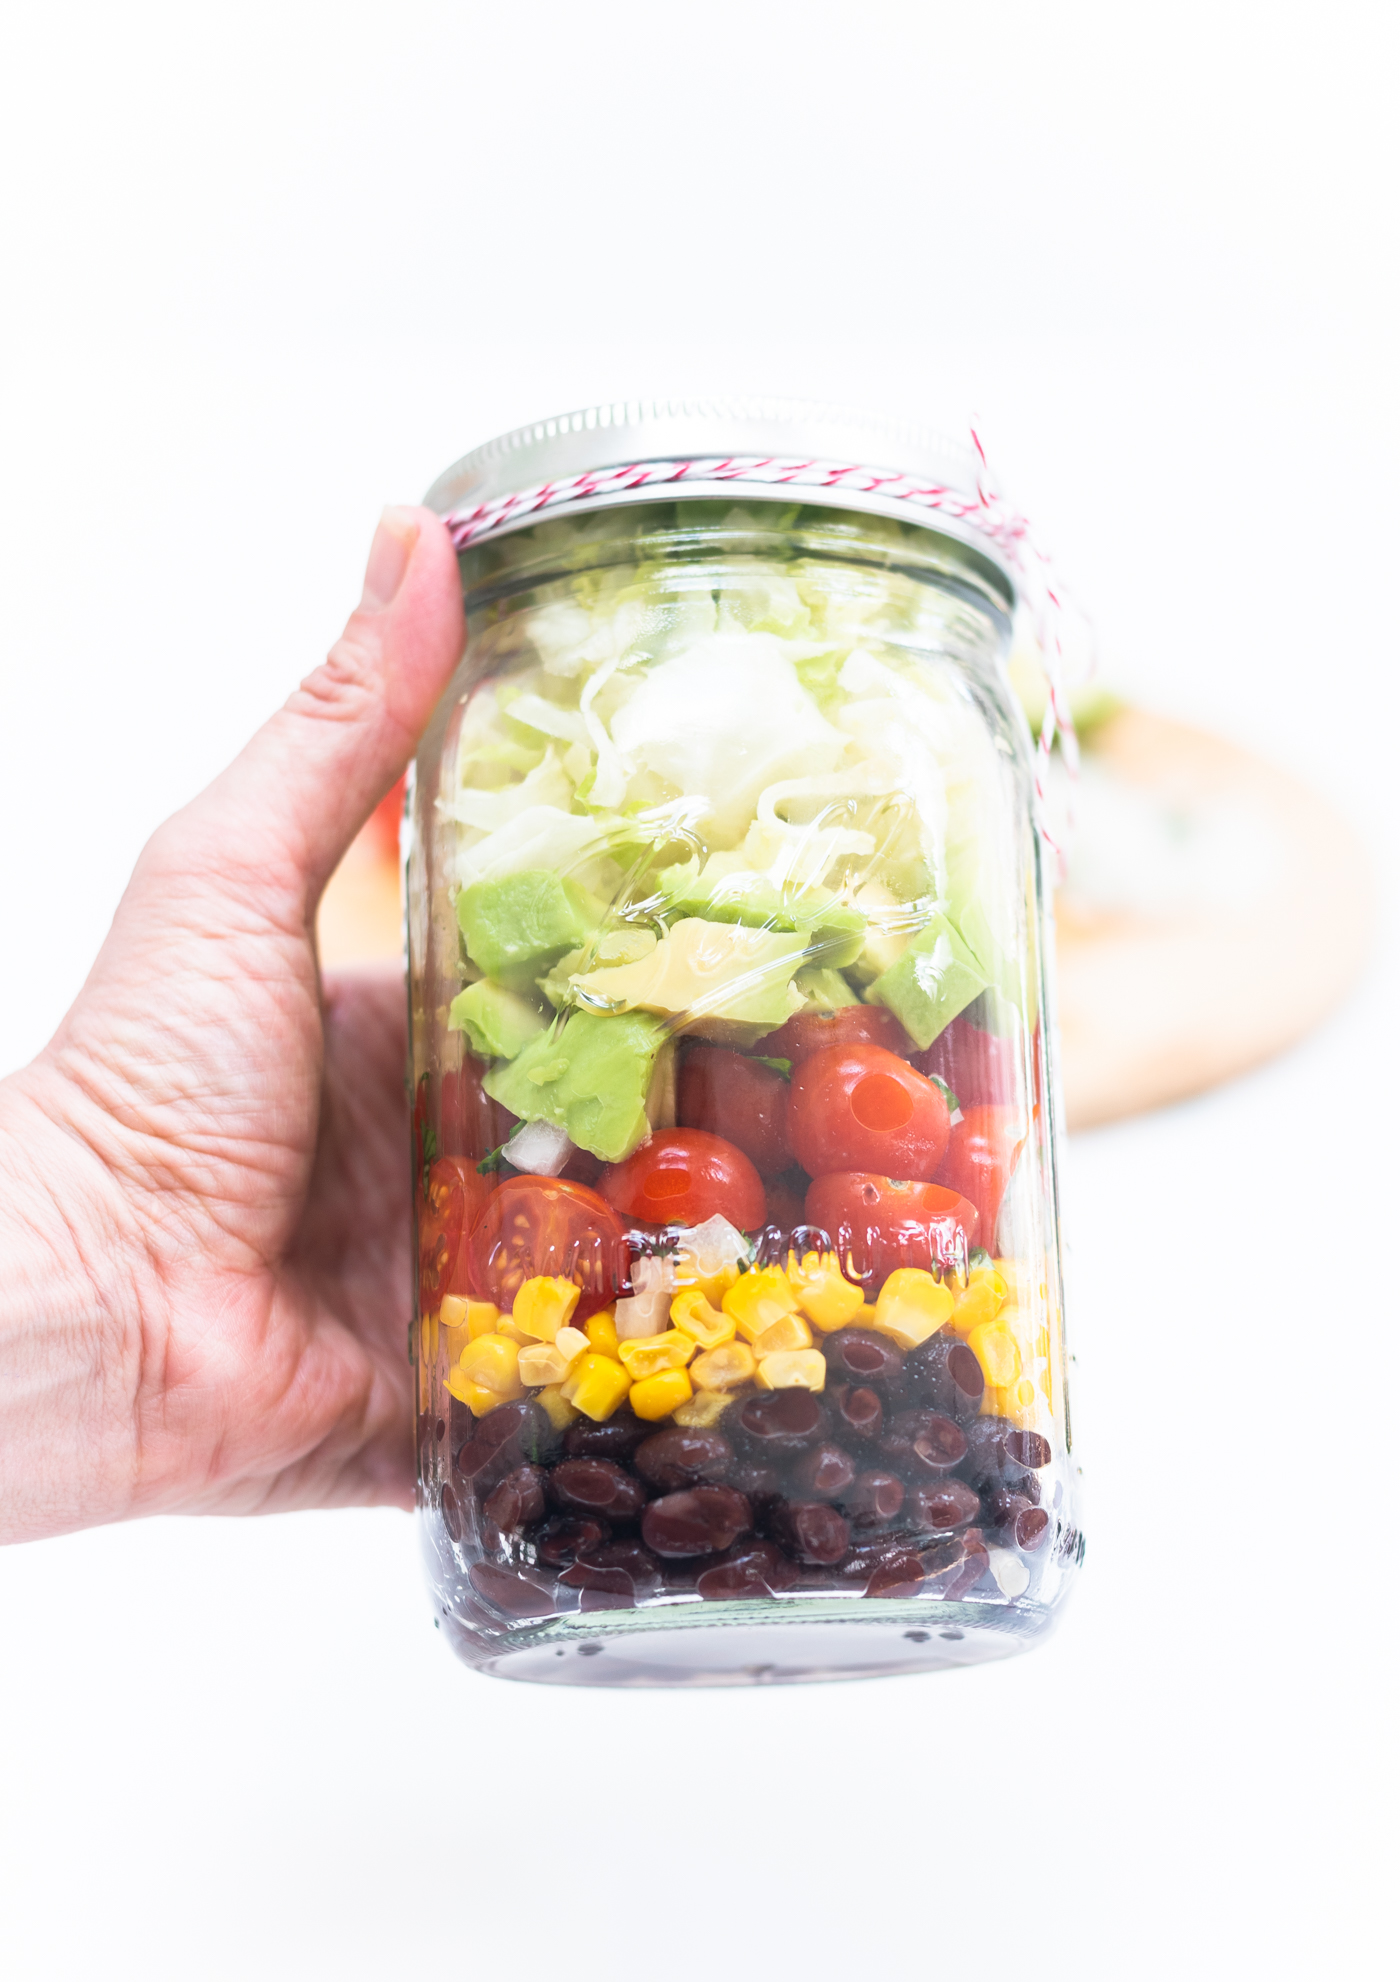 layered Taco Salad in a Jar - a perfect Mason Jar Recipe